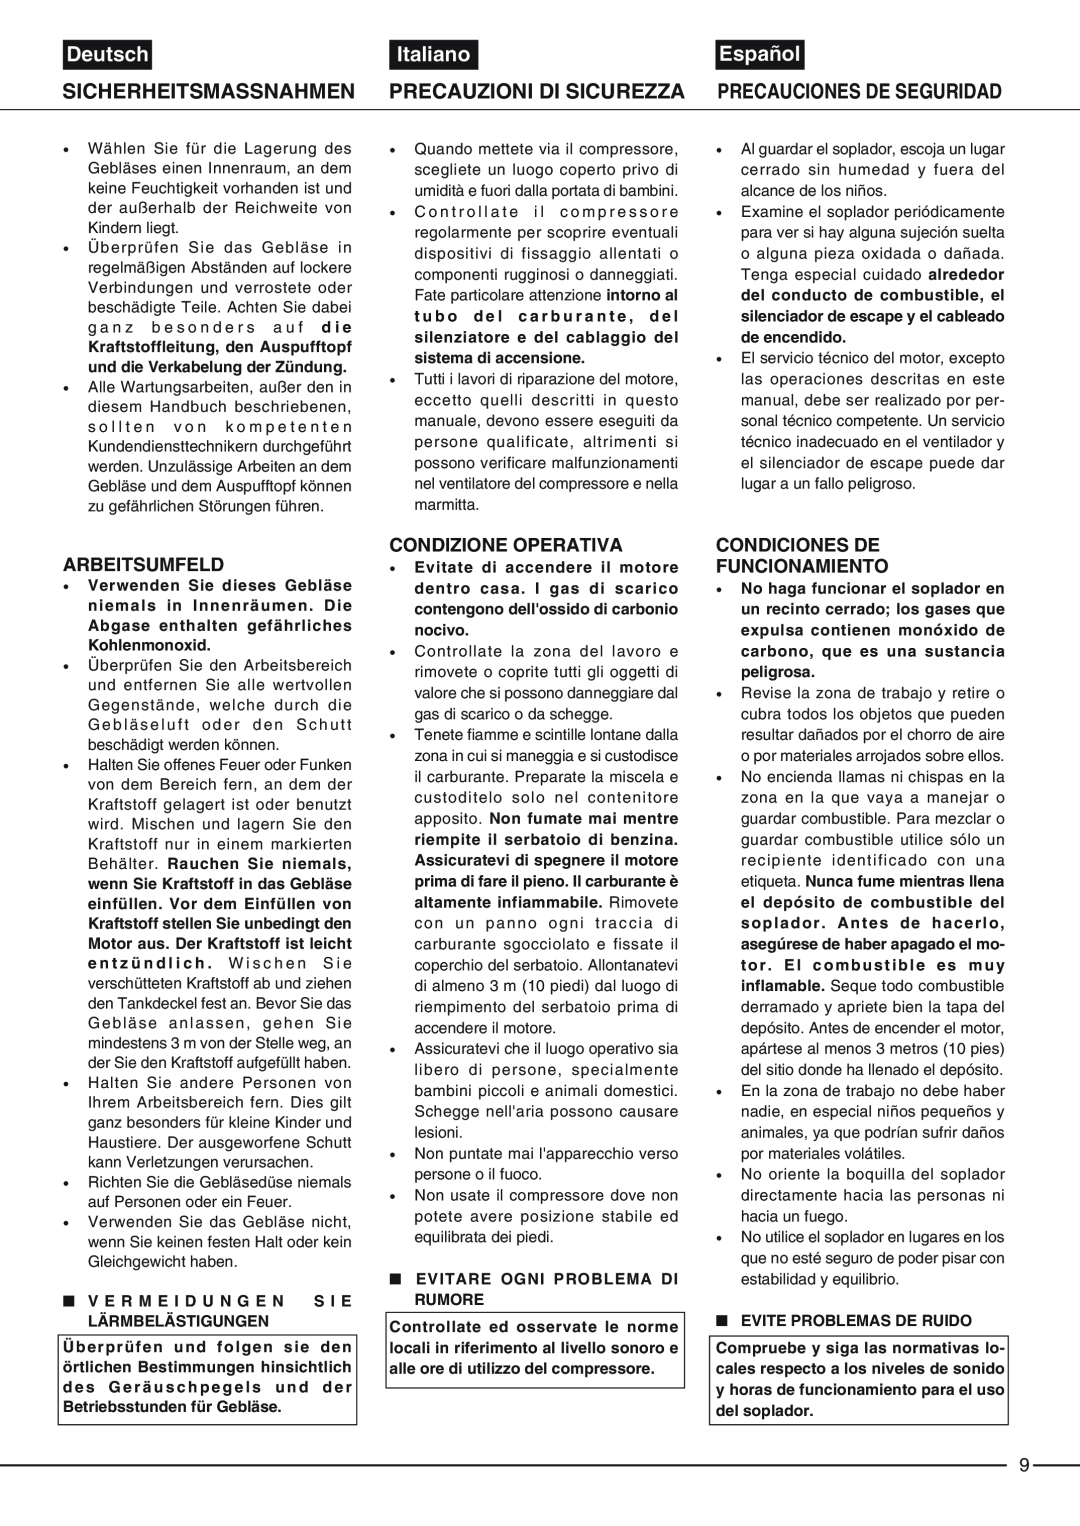 Zenoah EB4300 Arbeitsumfeld, Condizione Operativa, Condiciones De Funcionamiento, Deutsch, Sicherheitsmassnahmen, Italiano 